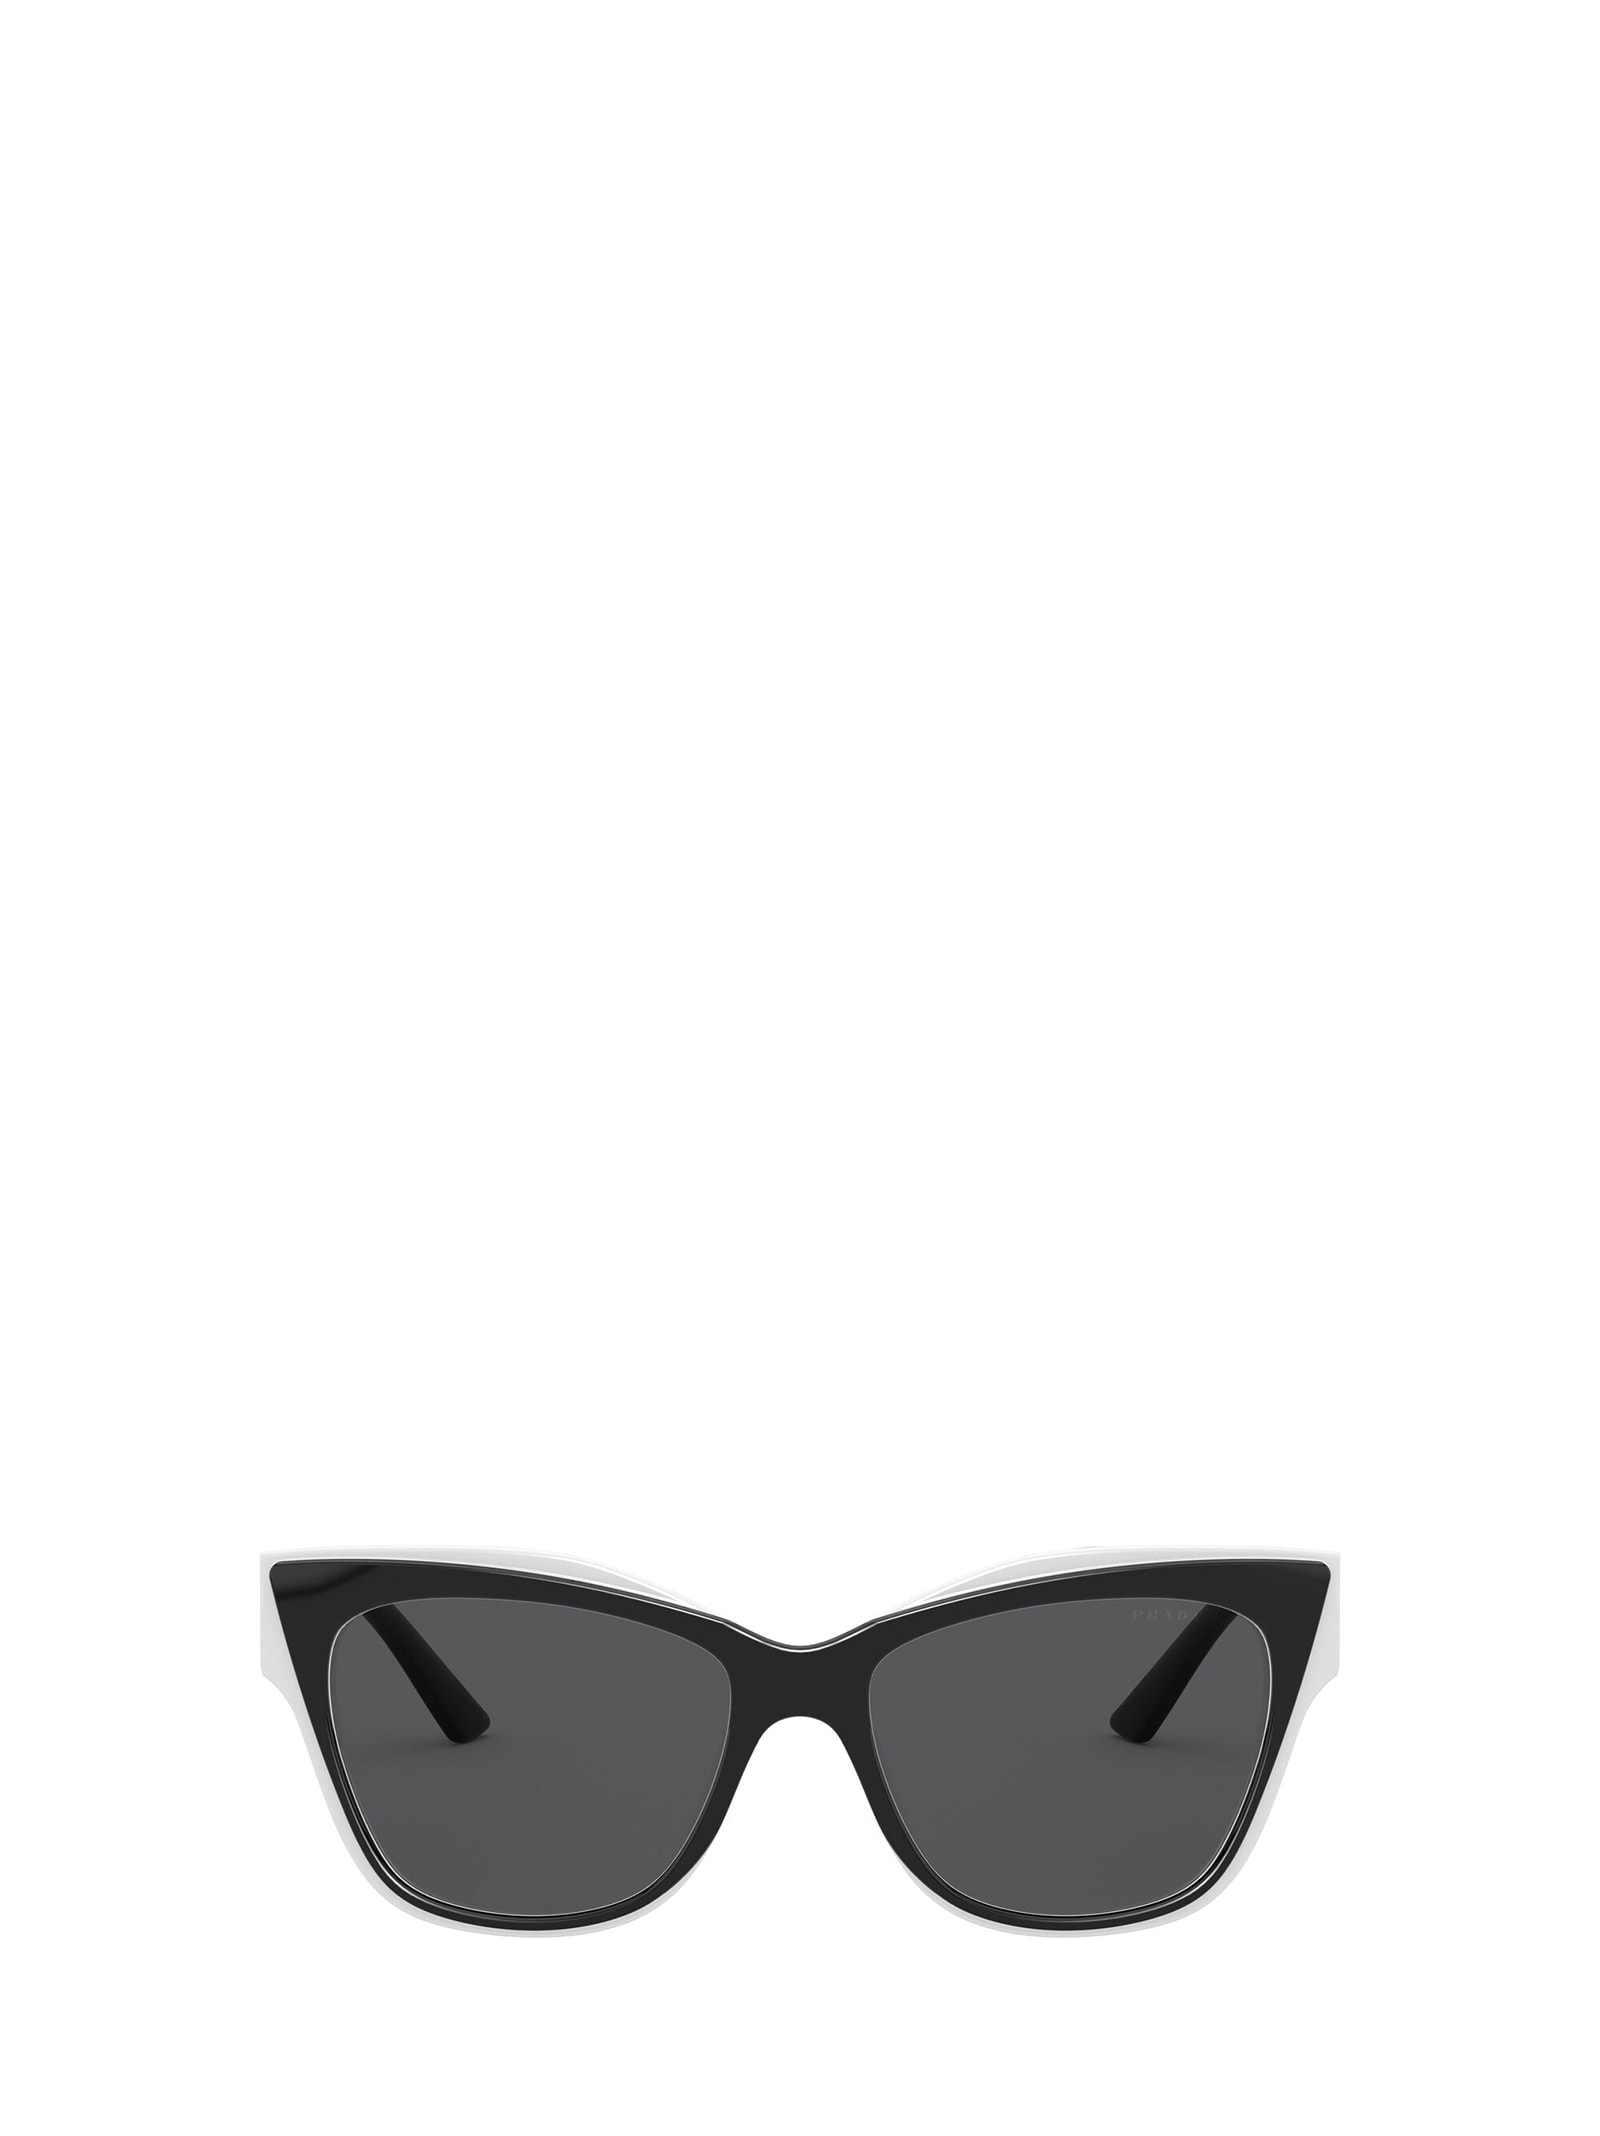 Prada Eyewear Prada Pr 23xs Black / White Sunglasses